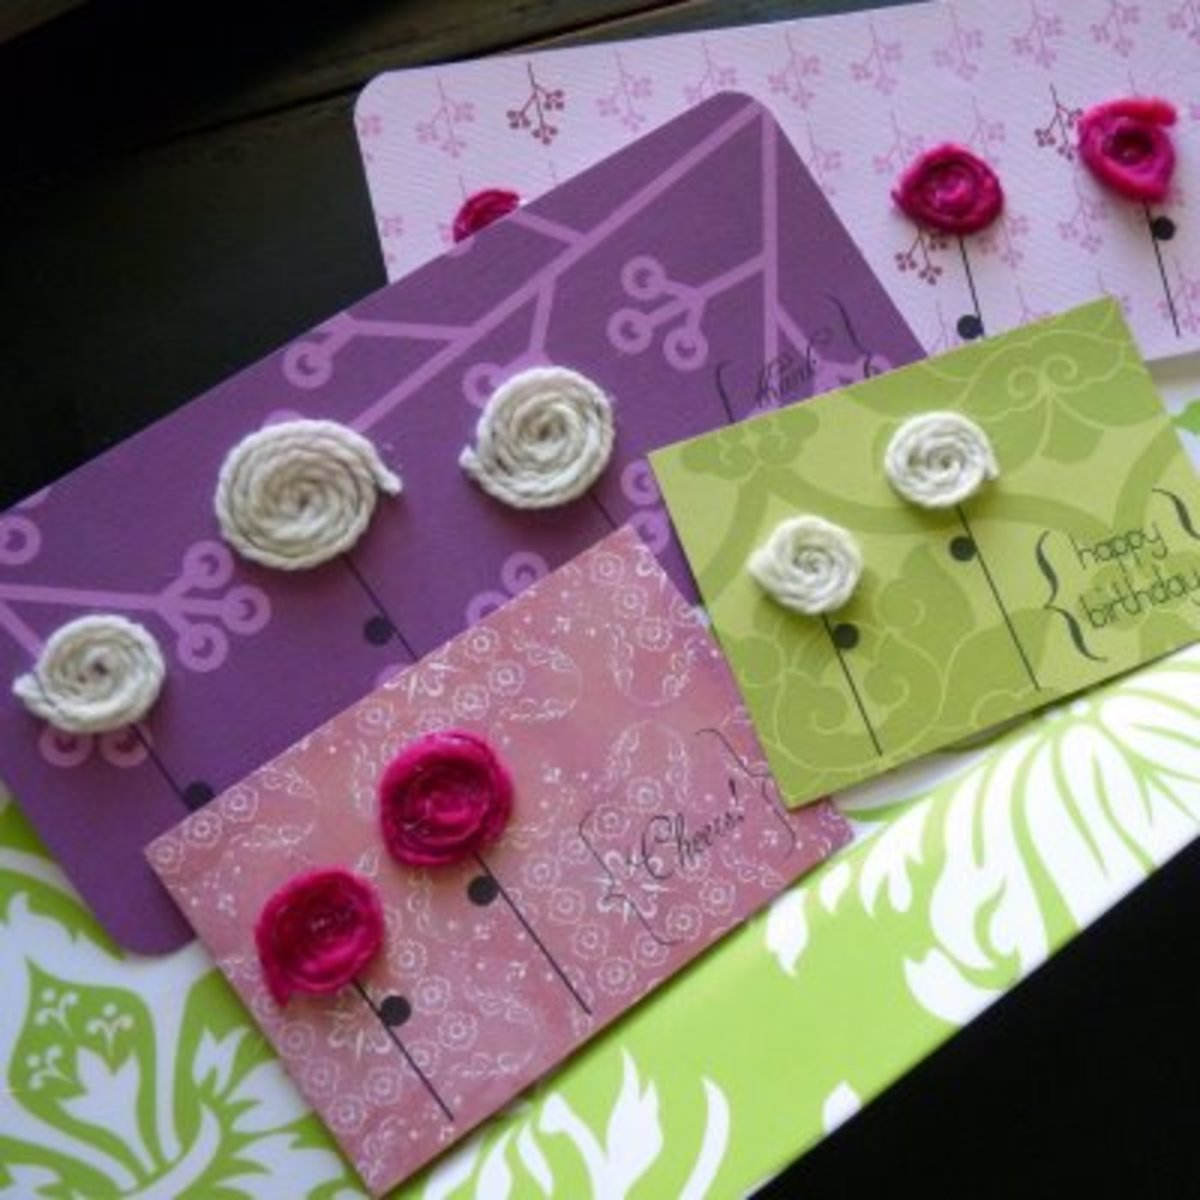 free-homemade-handmade-spring-greeting-cards-to-make